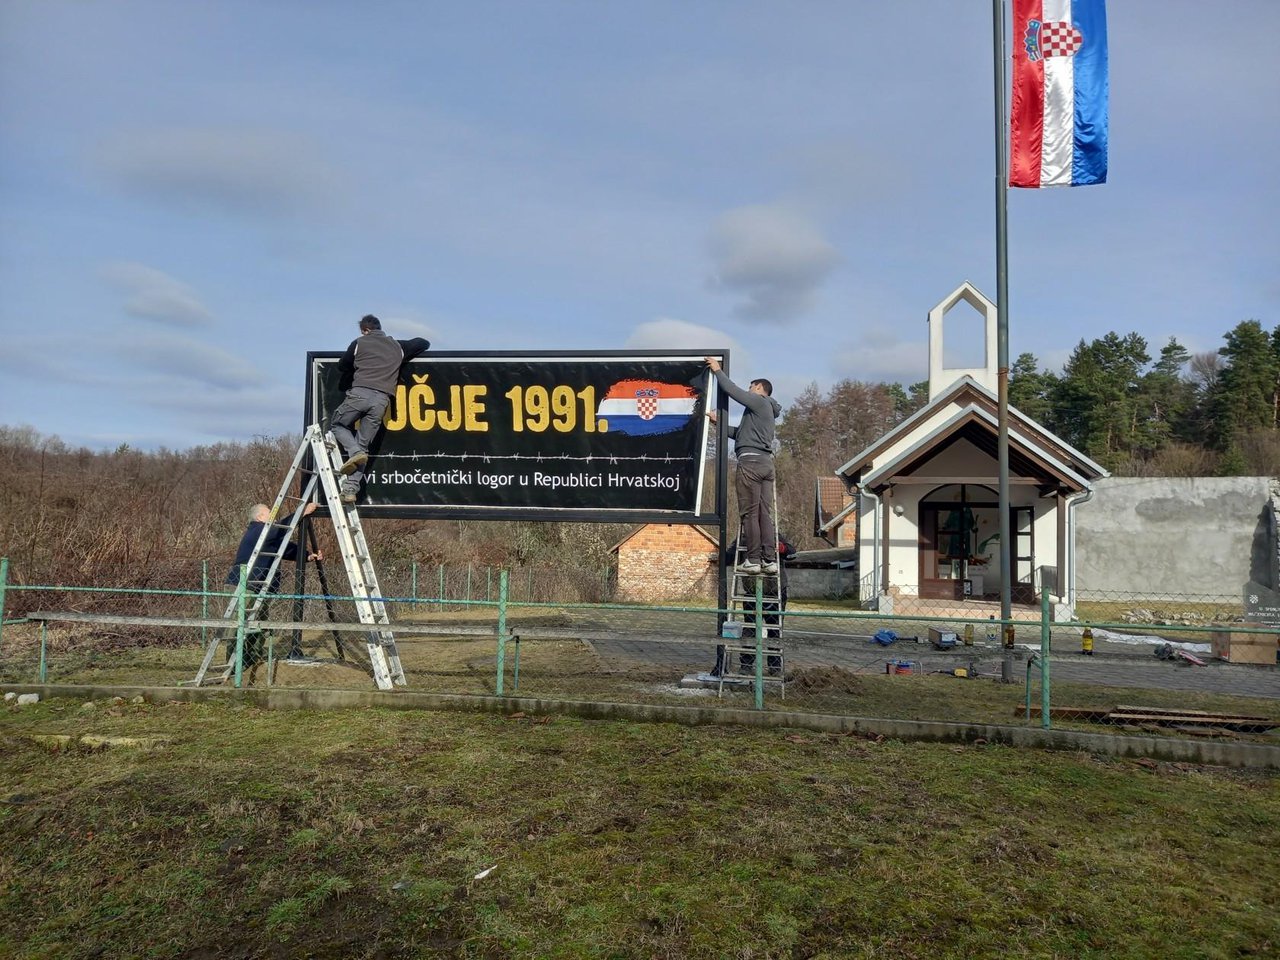 Fotografija: Udruga logoraša srpskog koncentracijskog logora "Bučje" postavila je veliki pano na mjestu gdje se nalazi spomen obilježje/Foto: Compas
